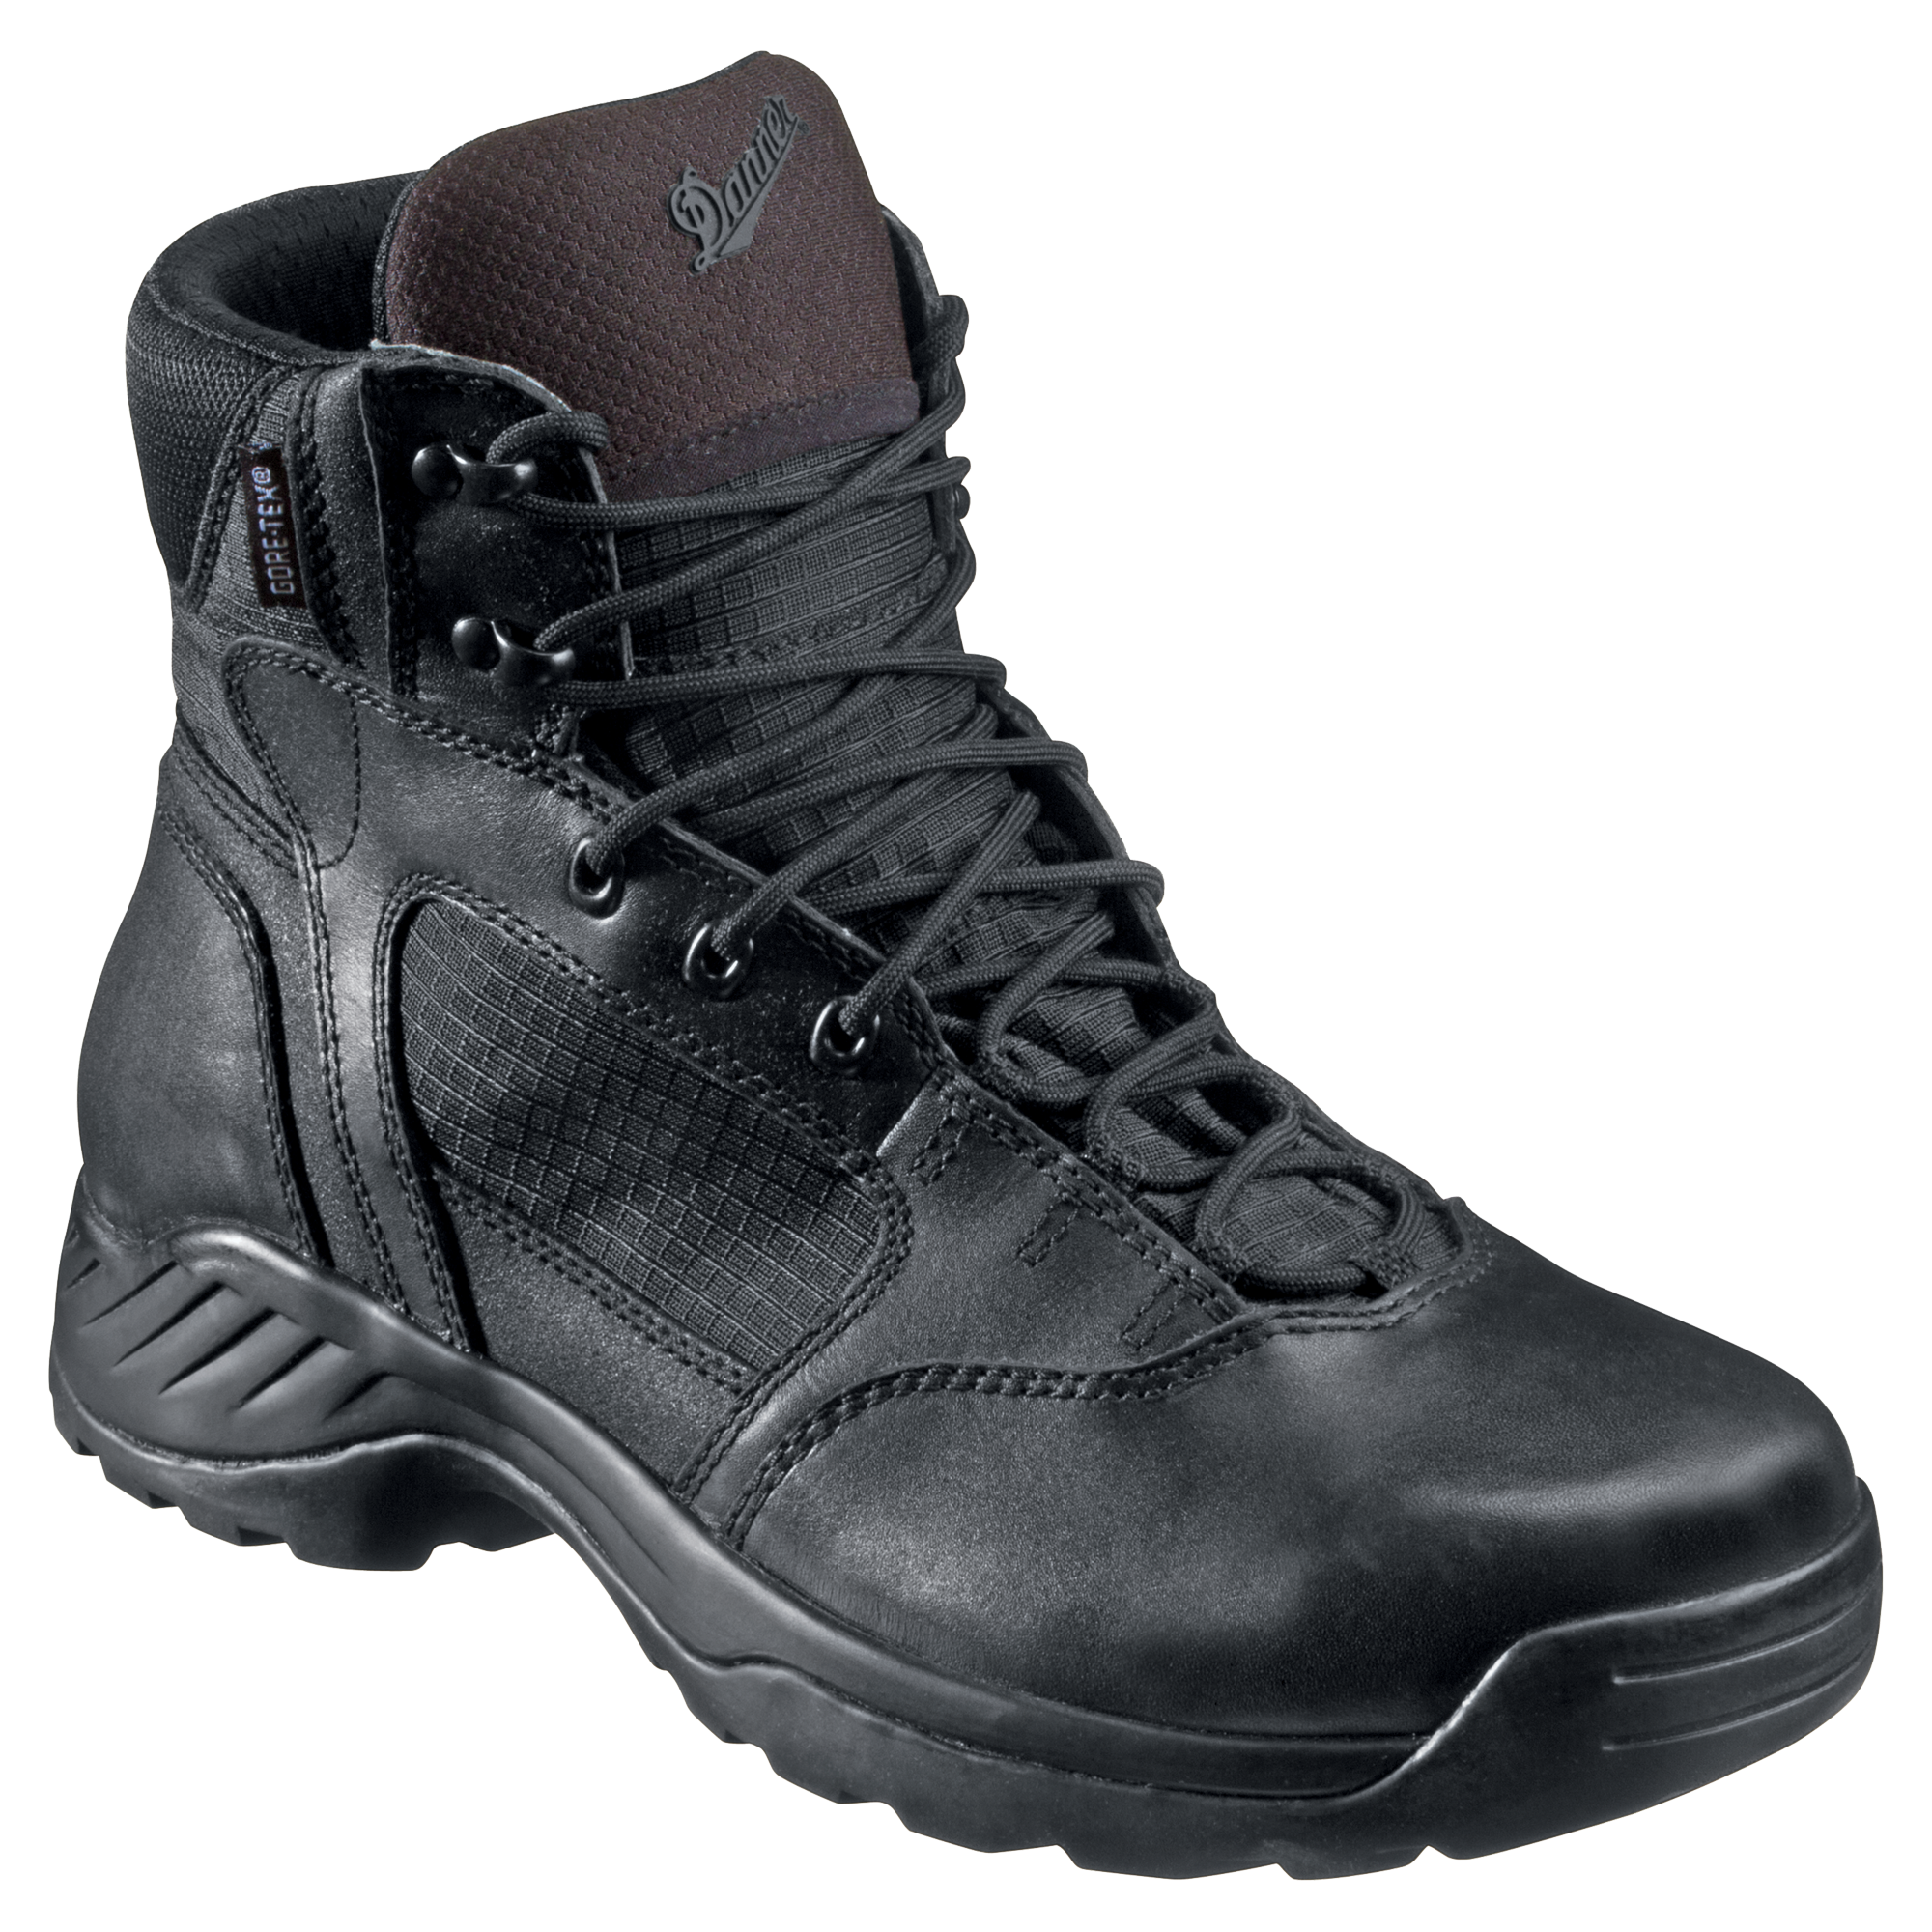 Danner Kinetic Side-Zip GORE-TEX Work Boots for Men - Black - 9W